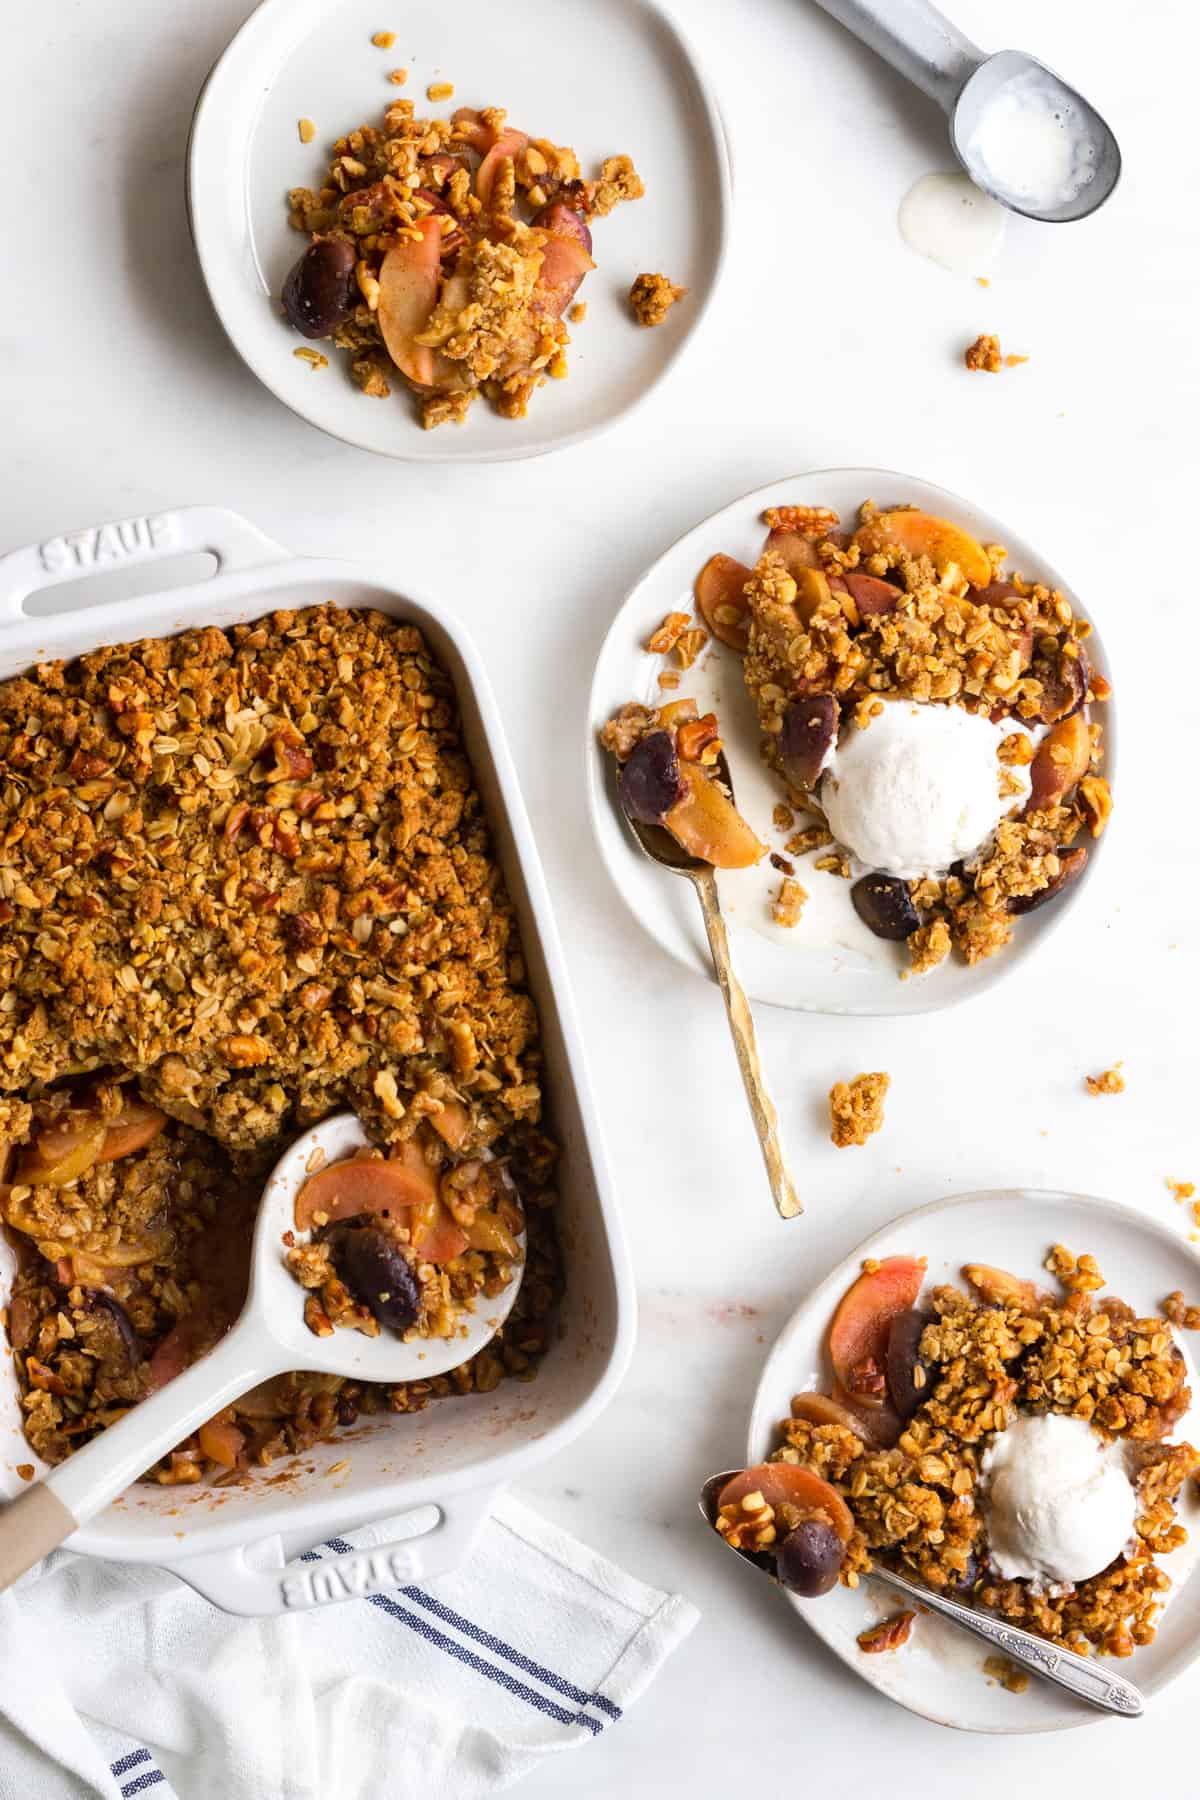 Apple, Fig & Walnut Crisp – Becky of Baking the Goods